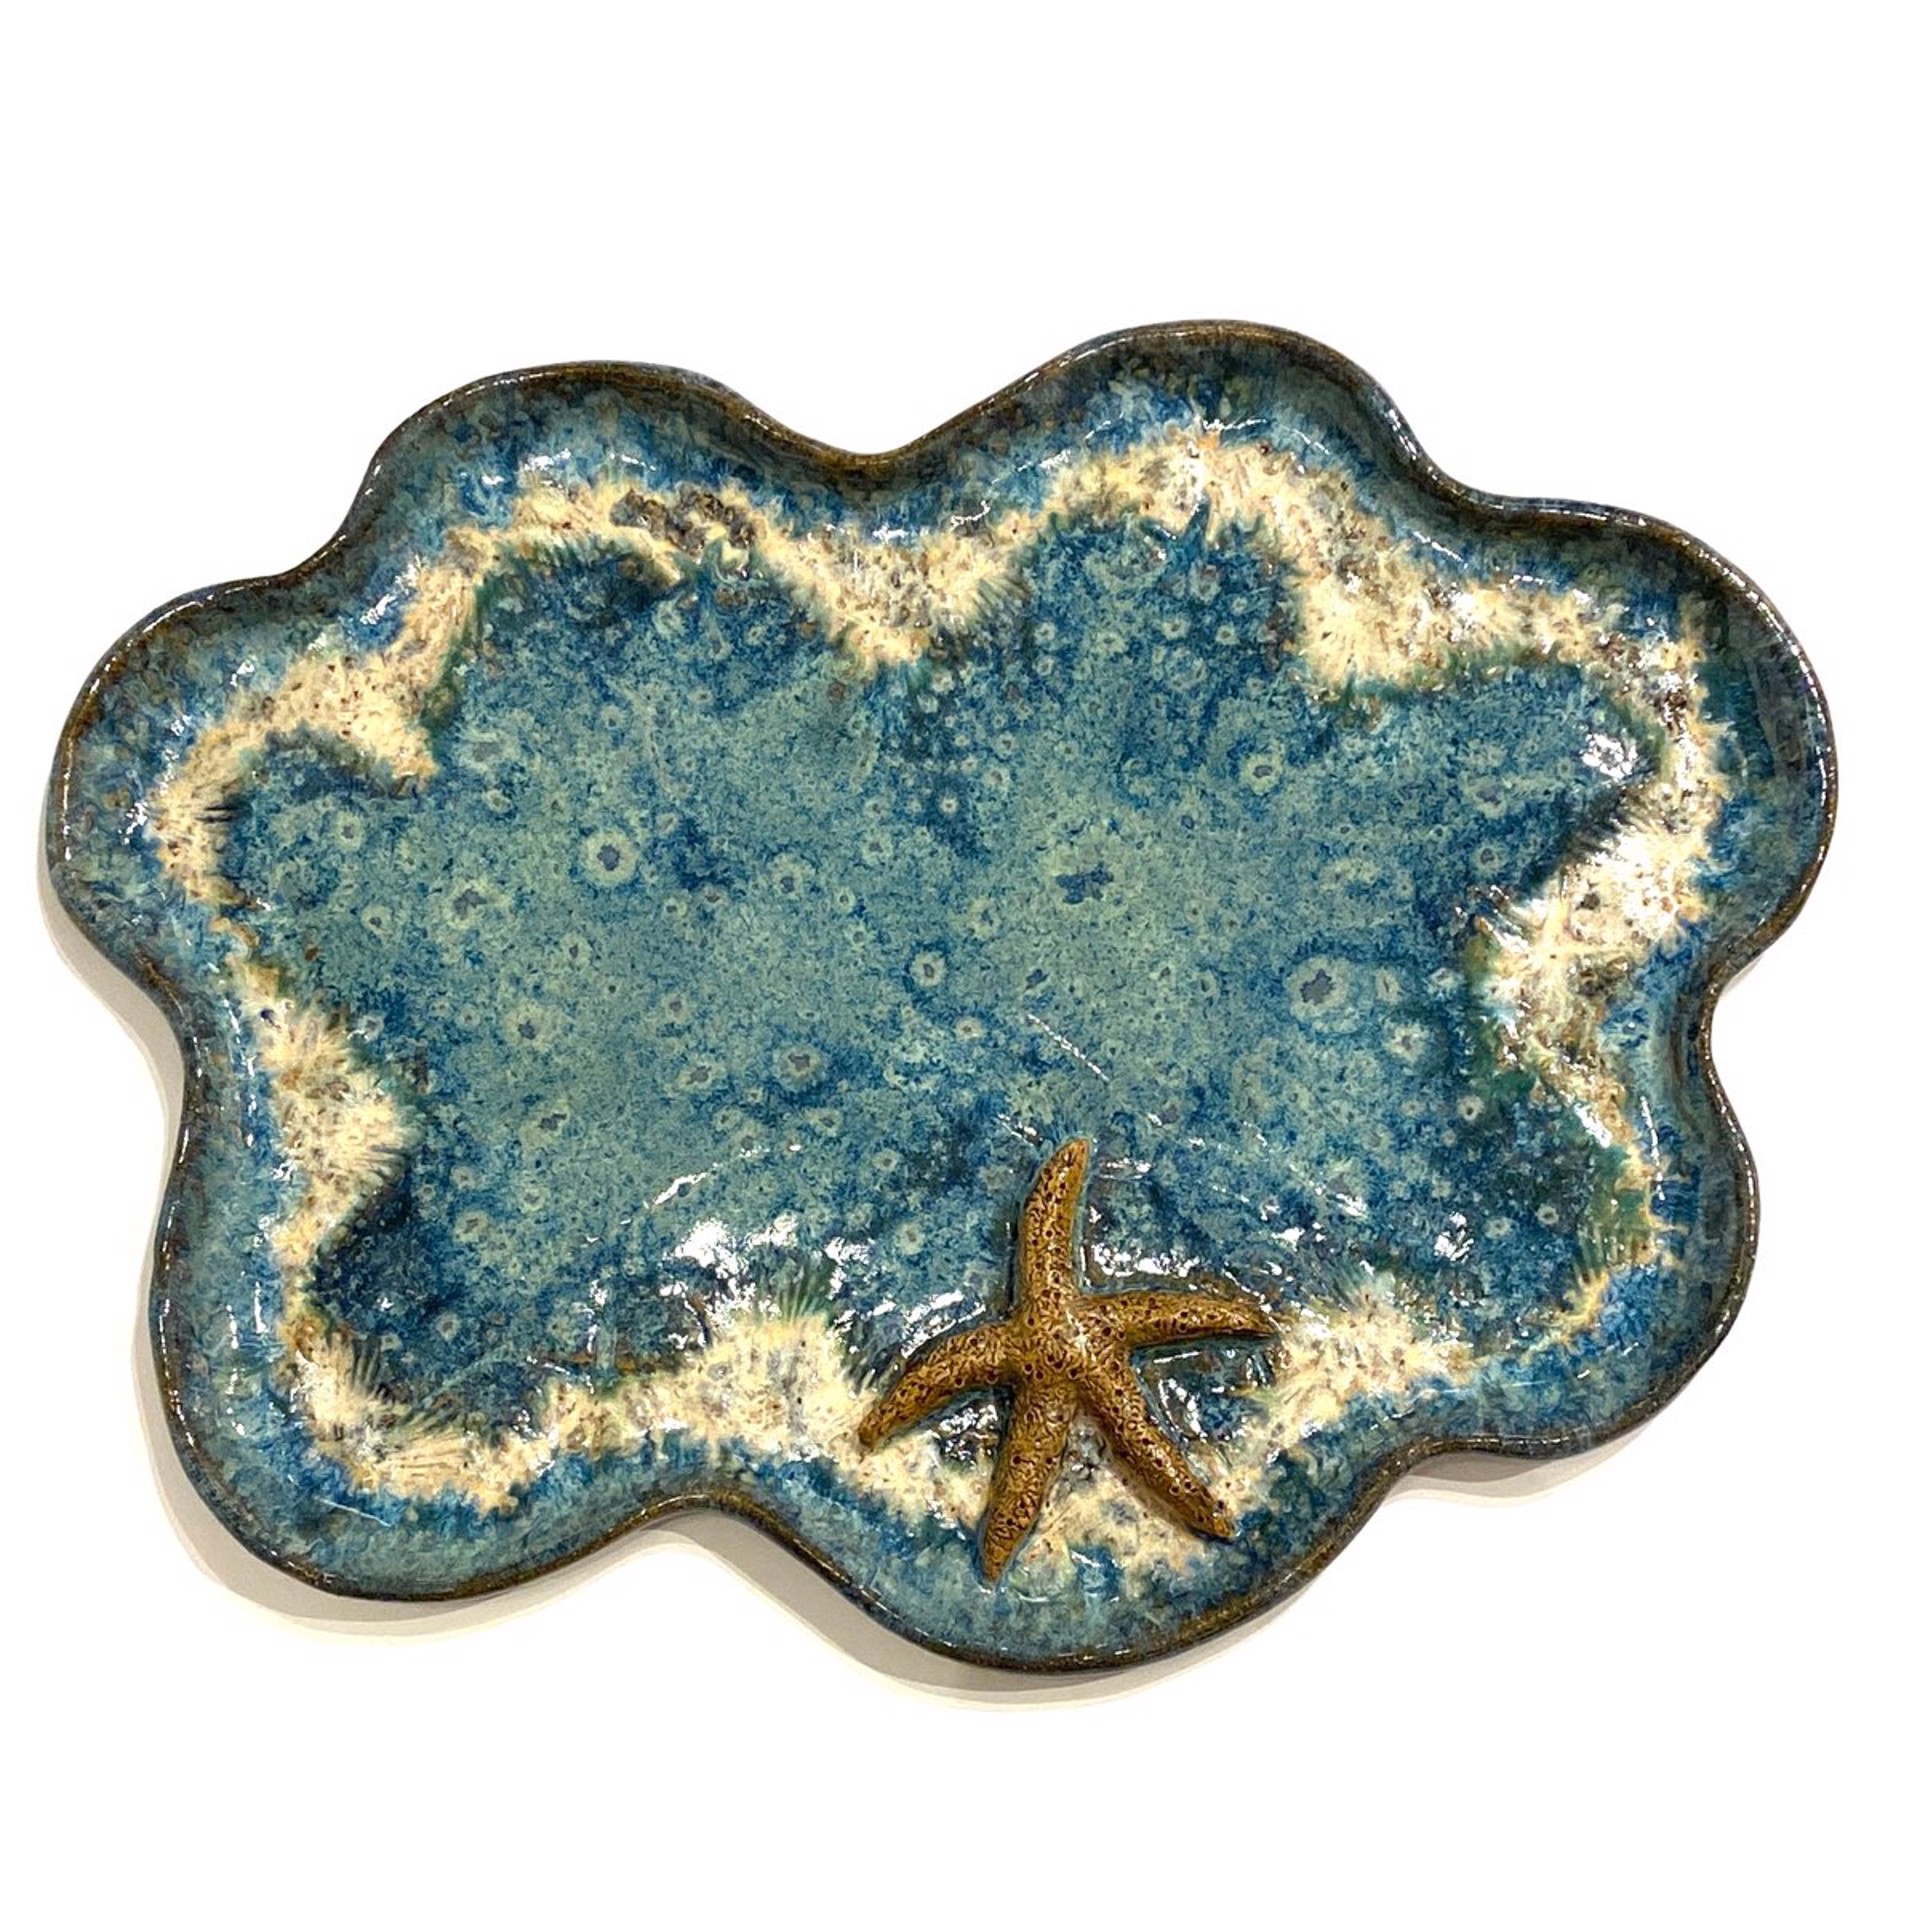 LG23-1019 Small Platter with Starfish (Blue Glaze) by Jim & Steffi Logan